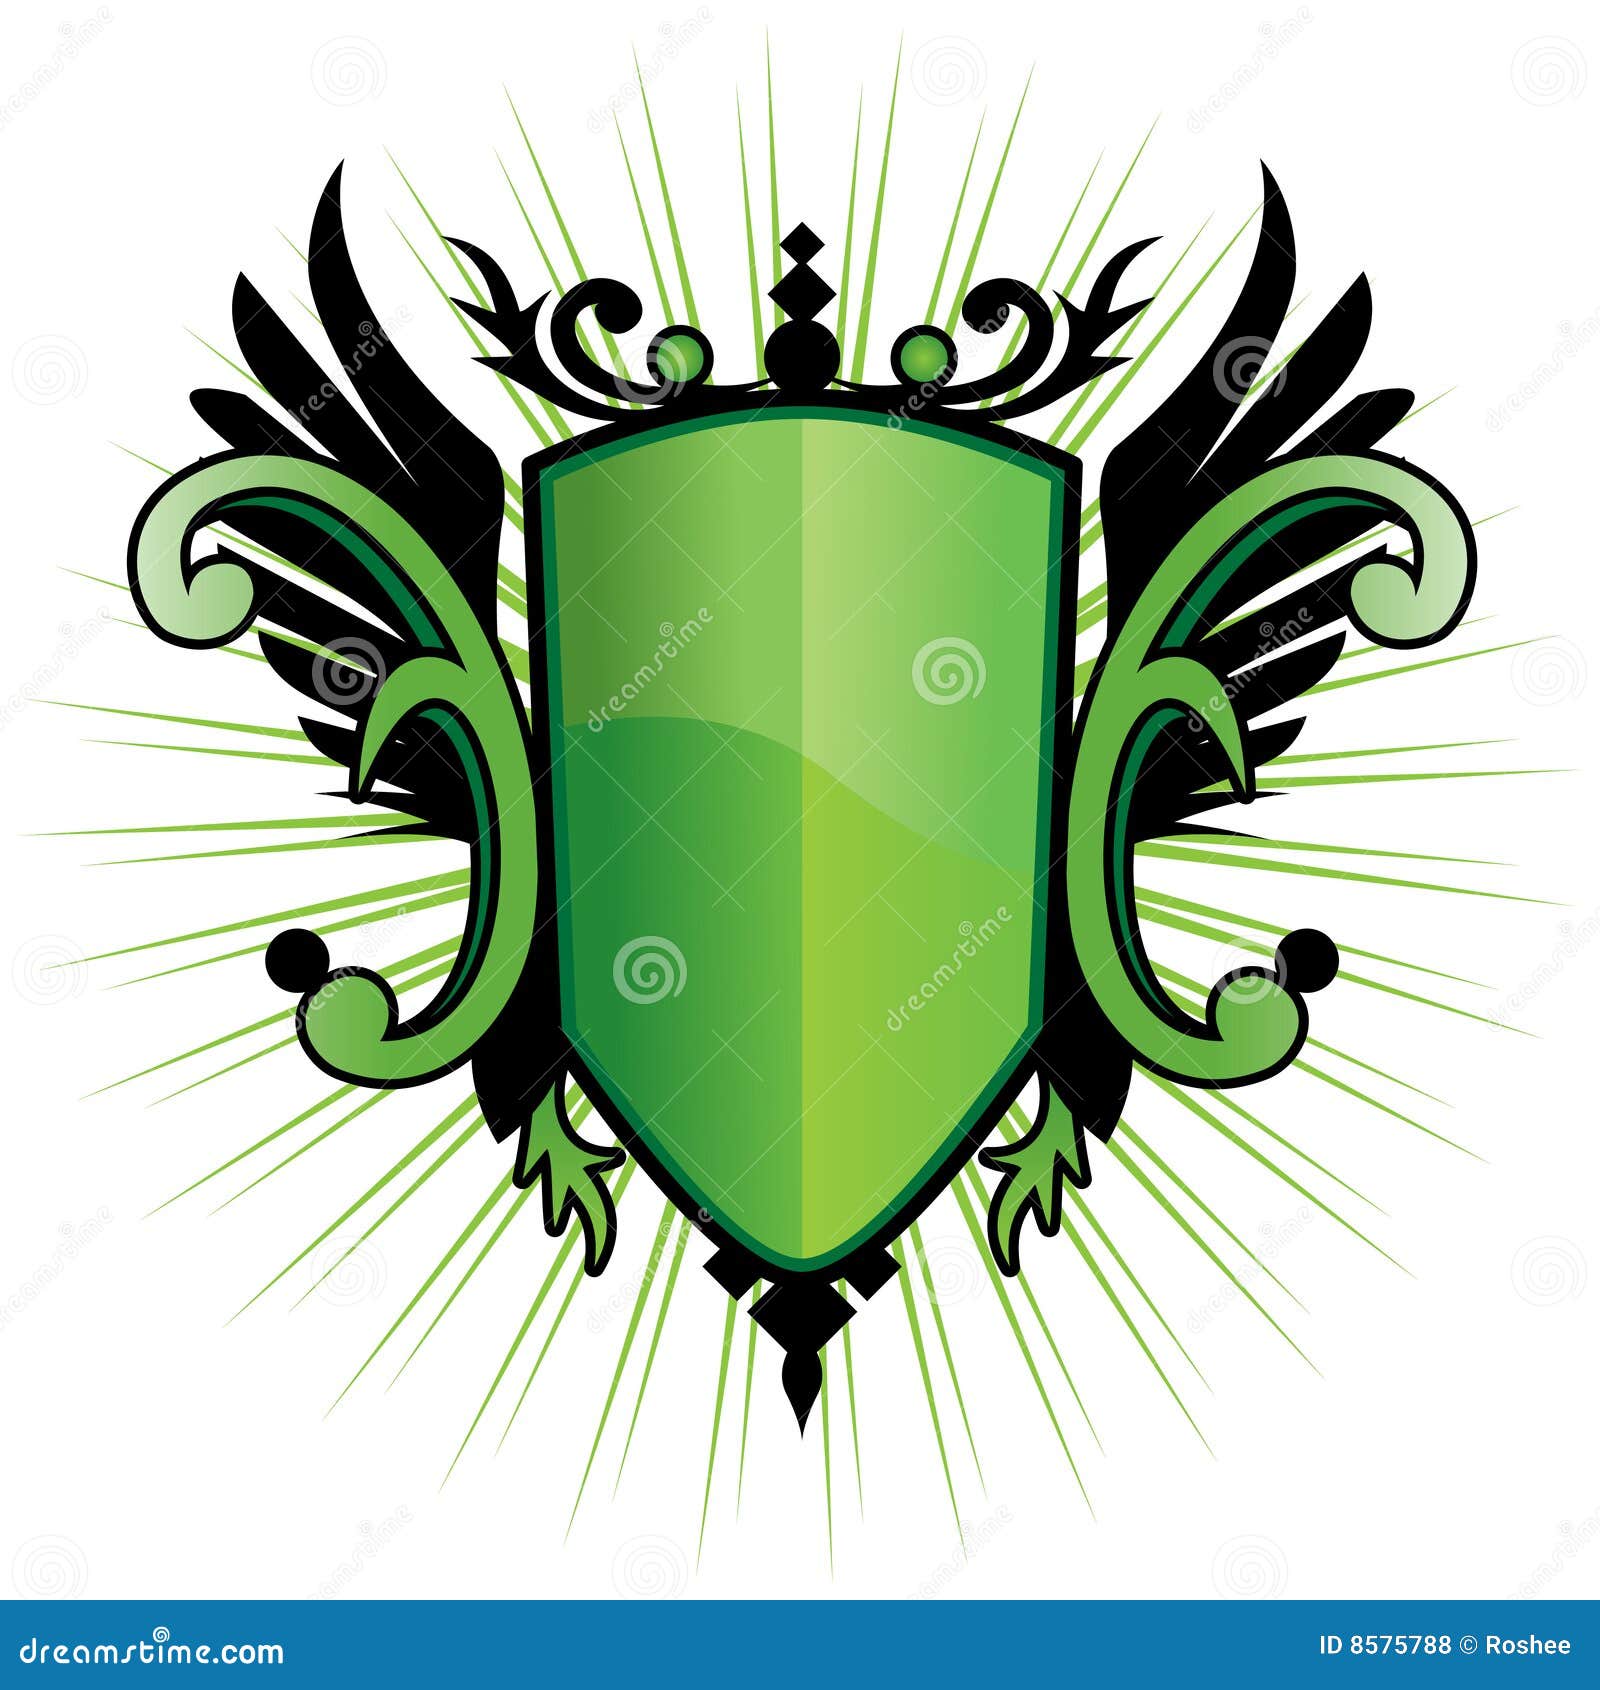 green herald crest